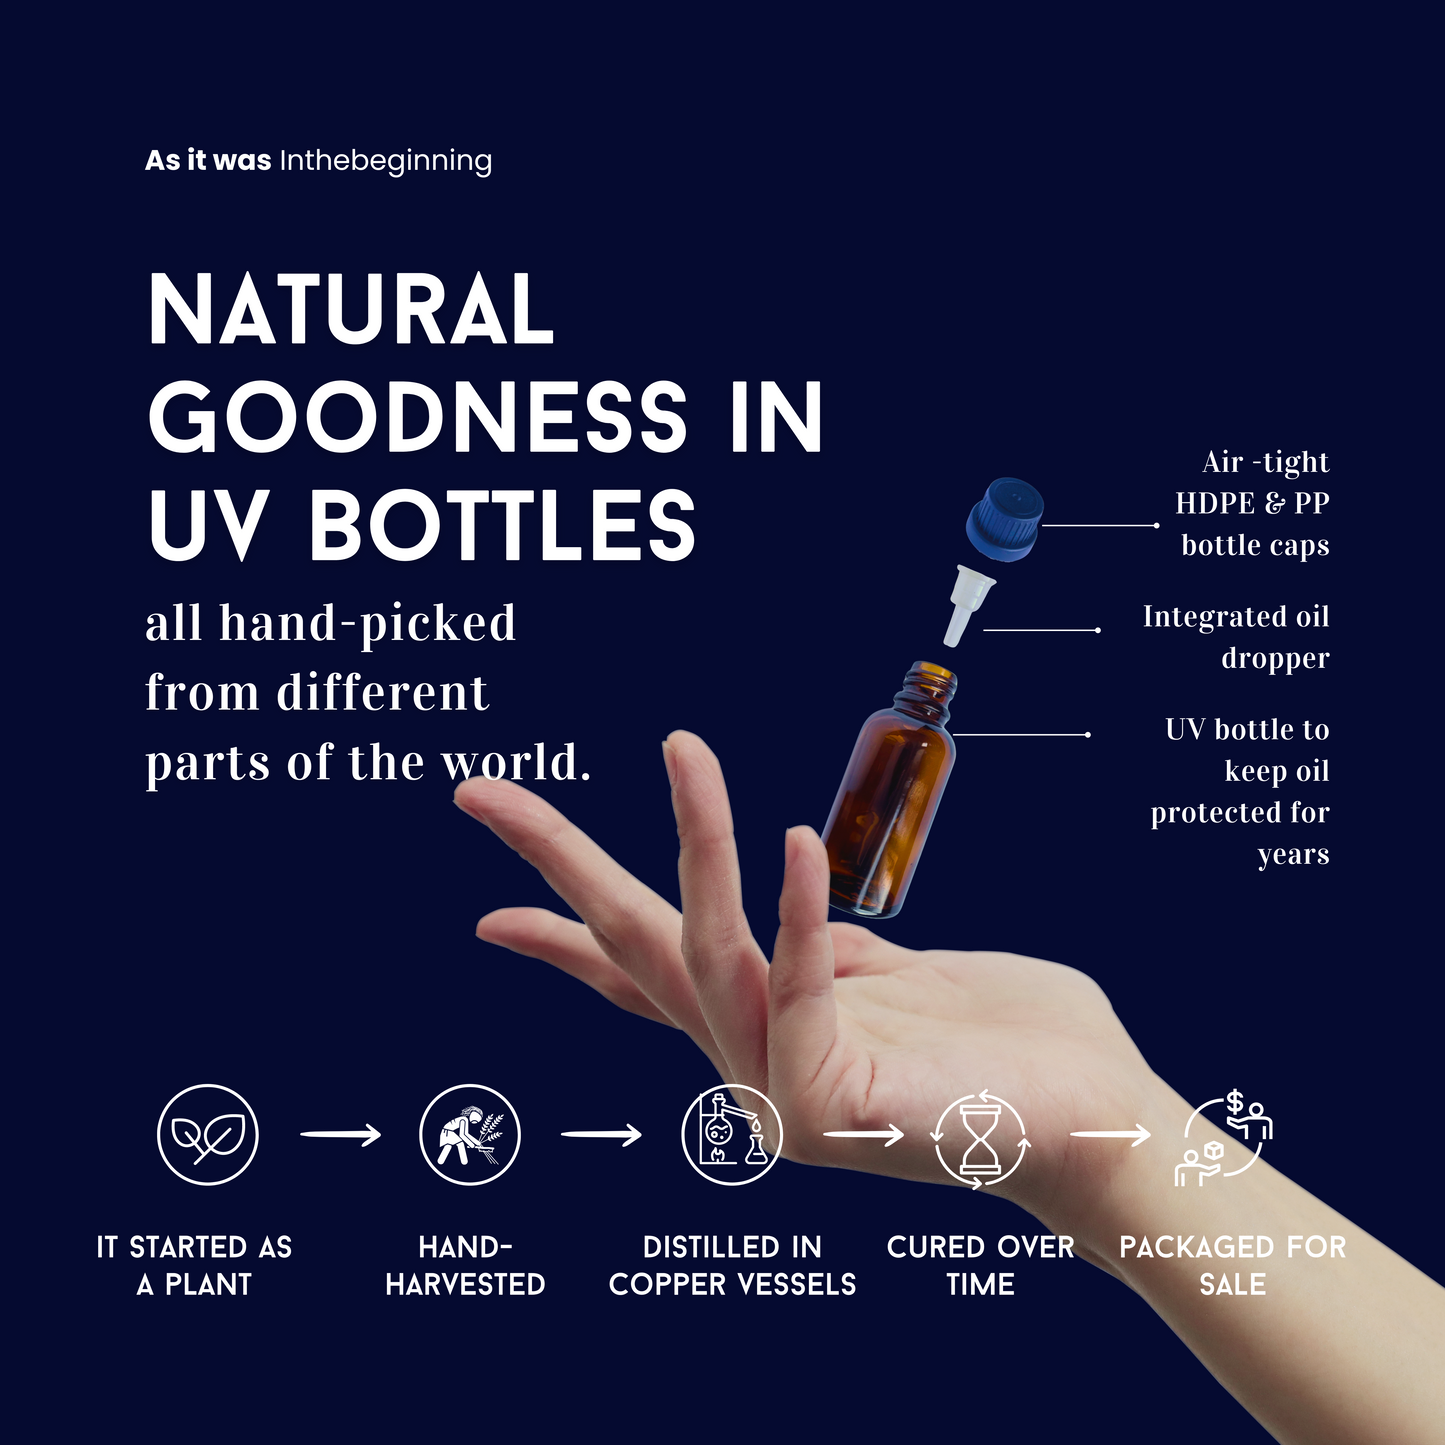 Organic Mandarin Essential Oil | 30ml / 1oz UV Bottle | Unblended | Aromatherapy | Vegan | Spirituality| Nature Heals - ITBO Green